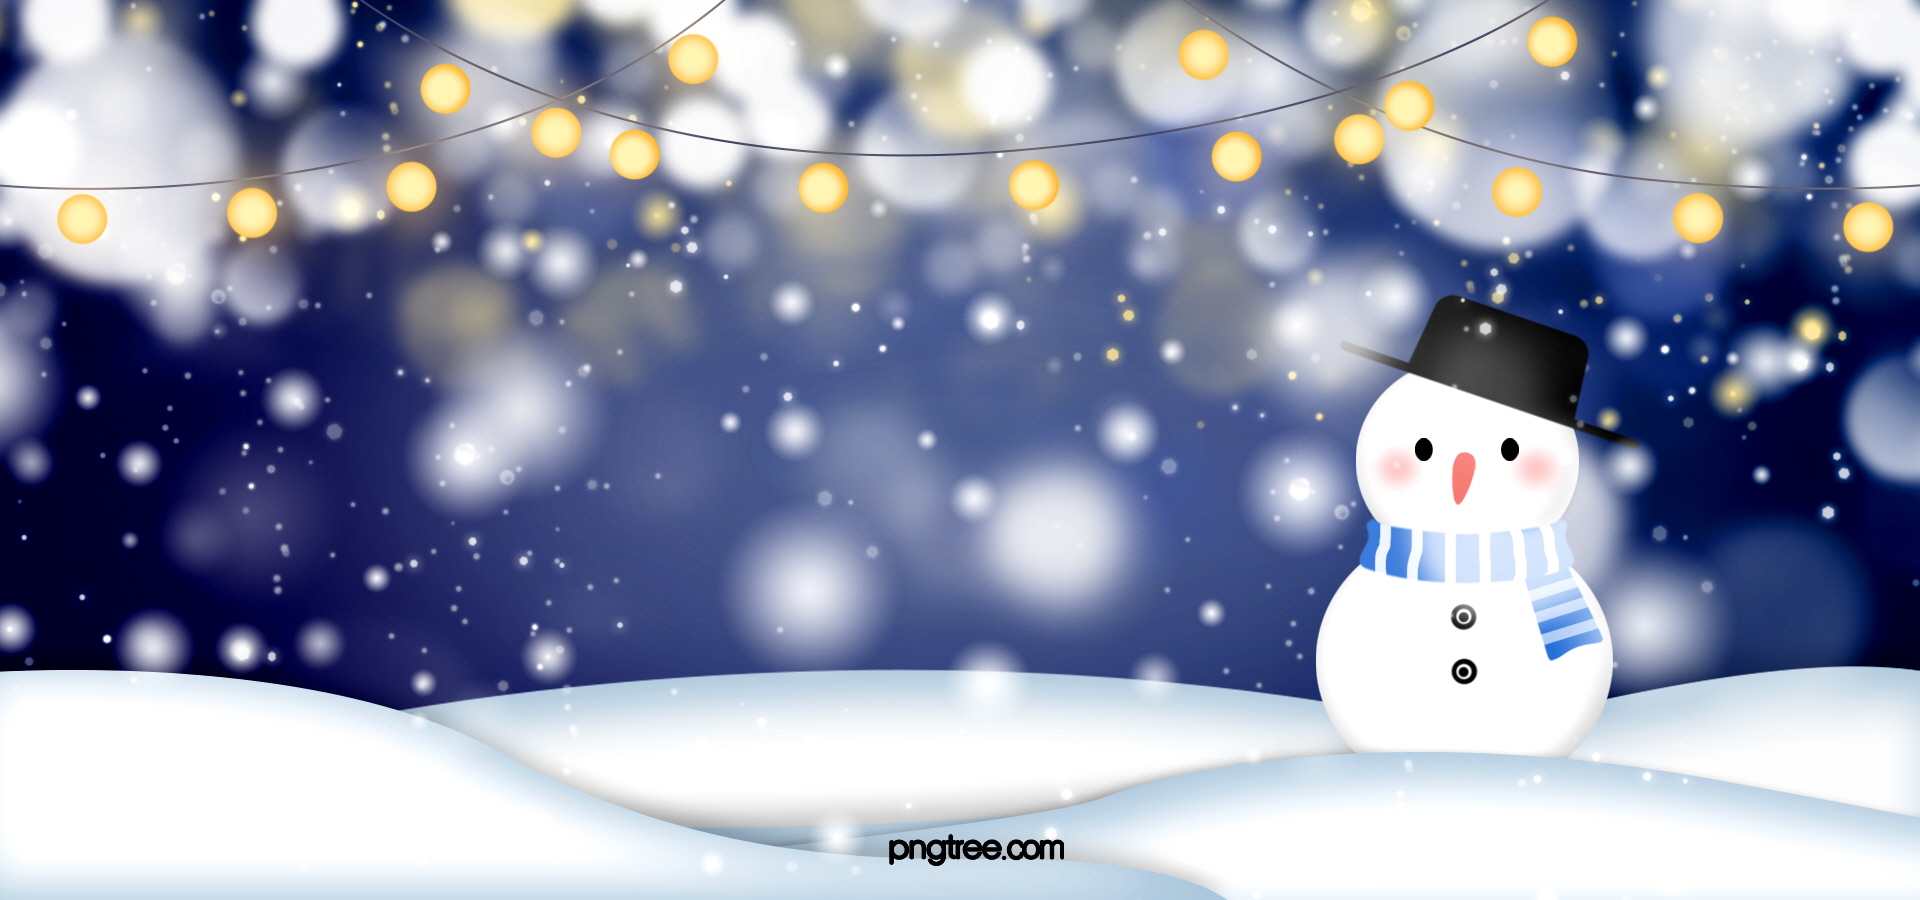 —Pngtree—winter snowman dreamy background_1168720.jpg